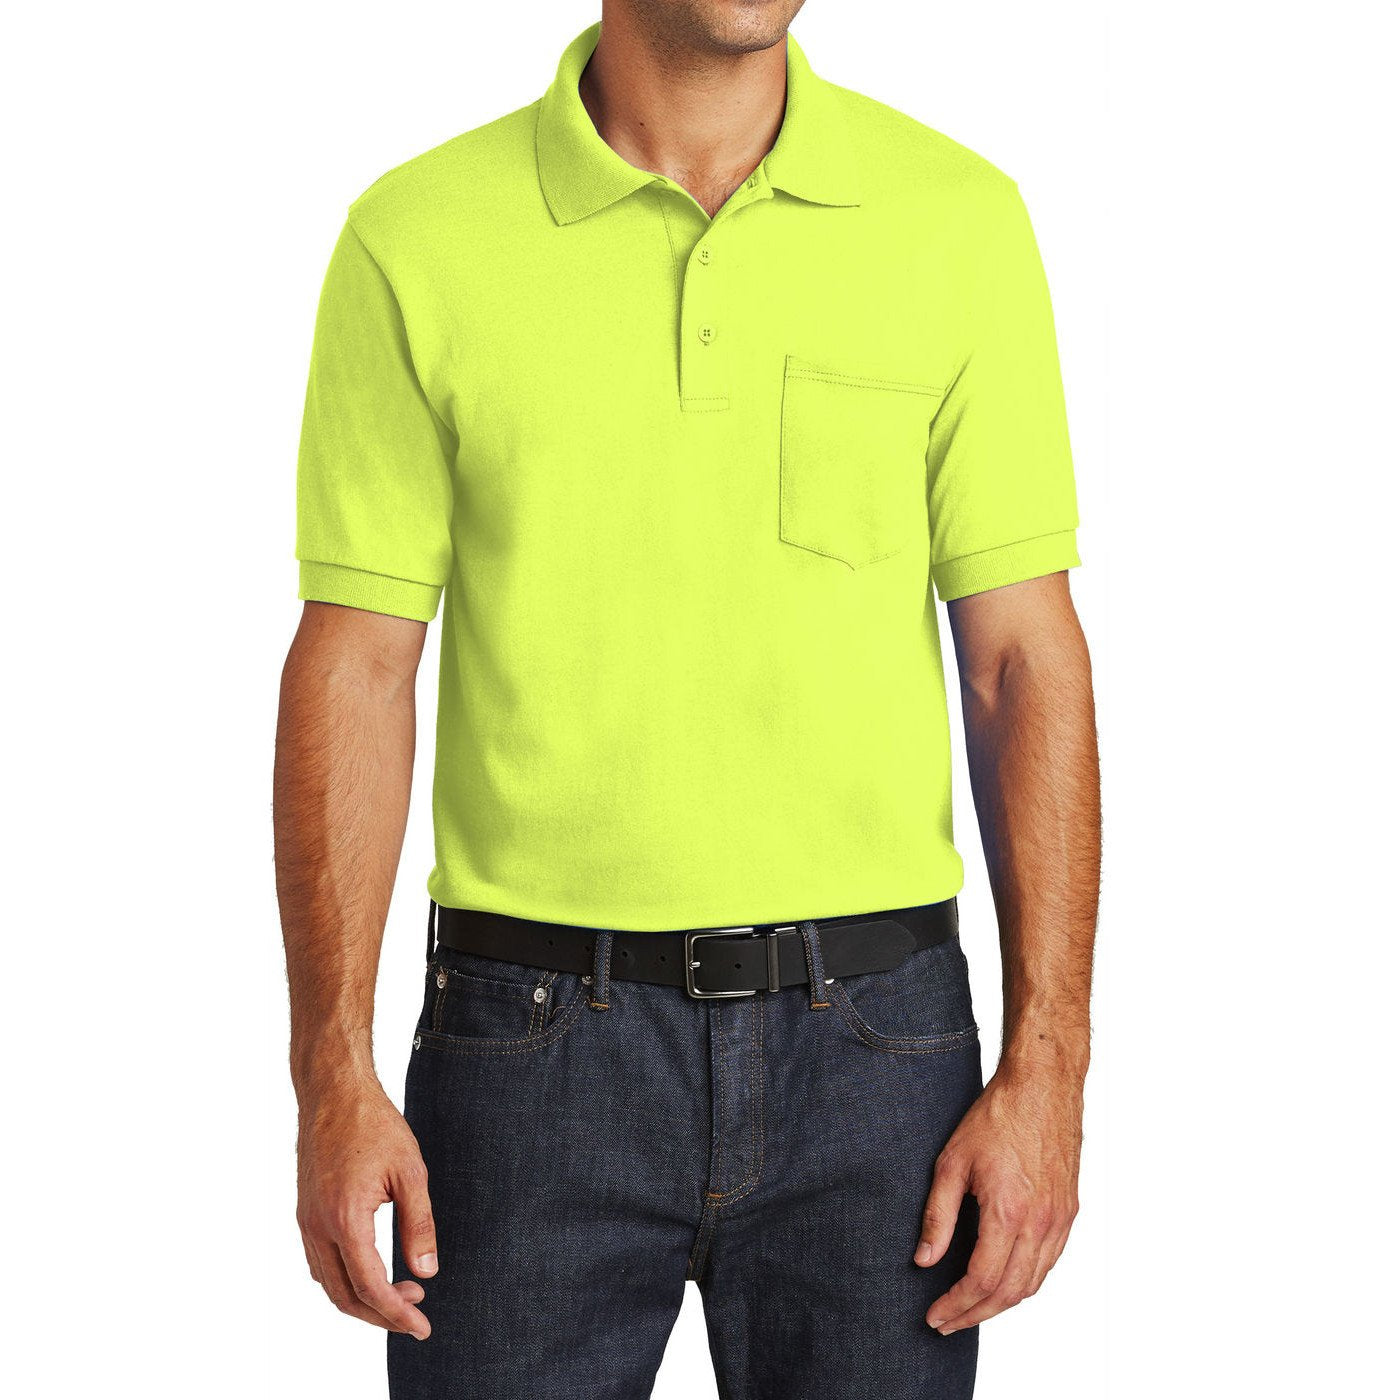 Mafoose Men's Core Blend Jersey Knit Pocket Polo Shirt Safety Green